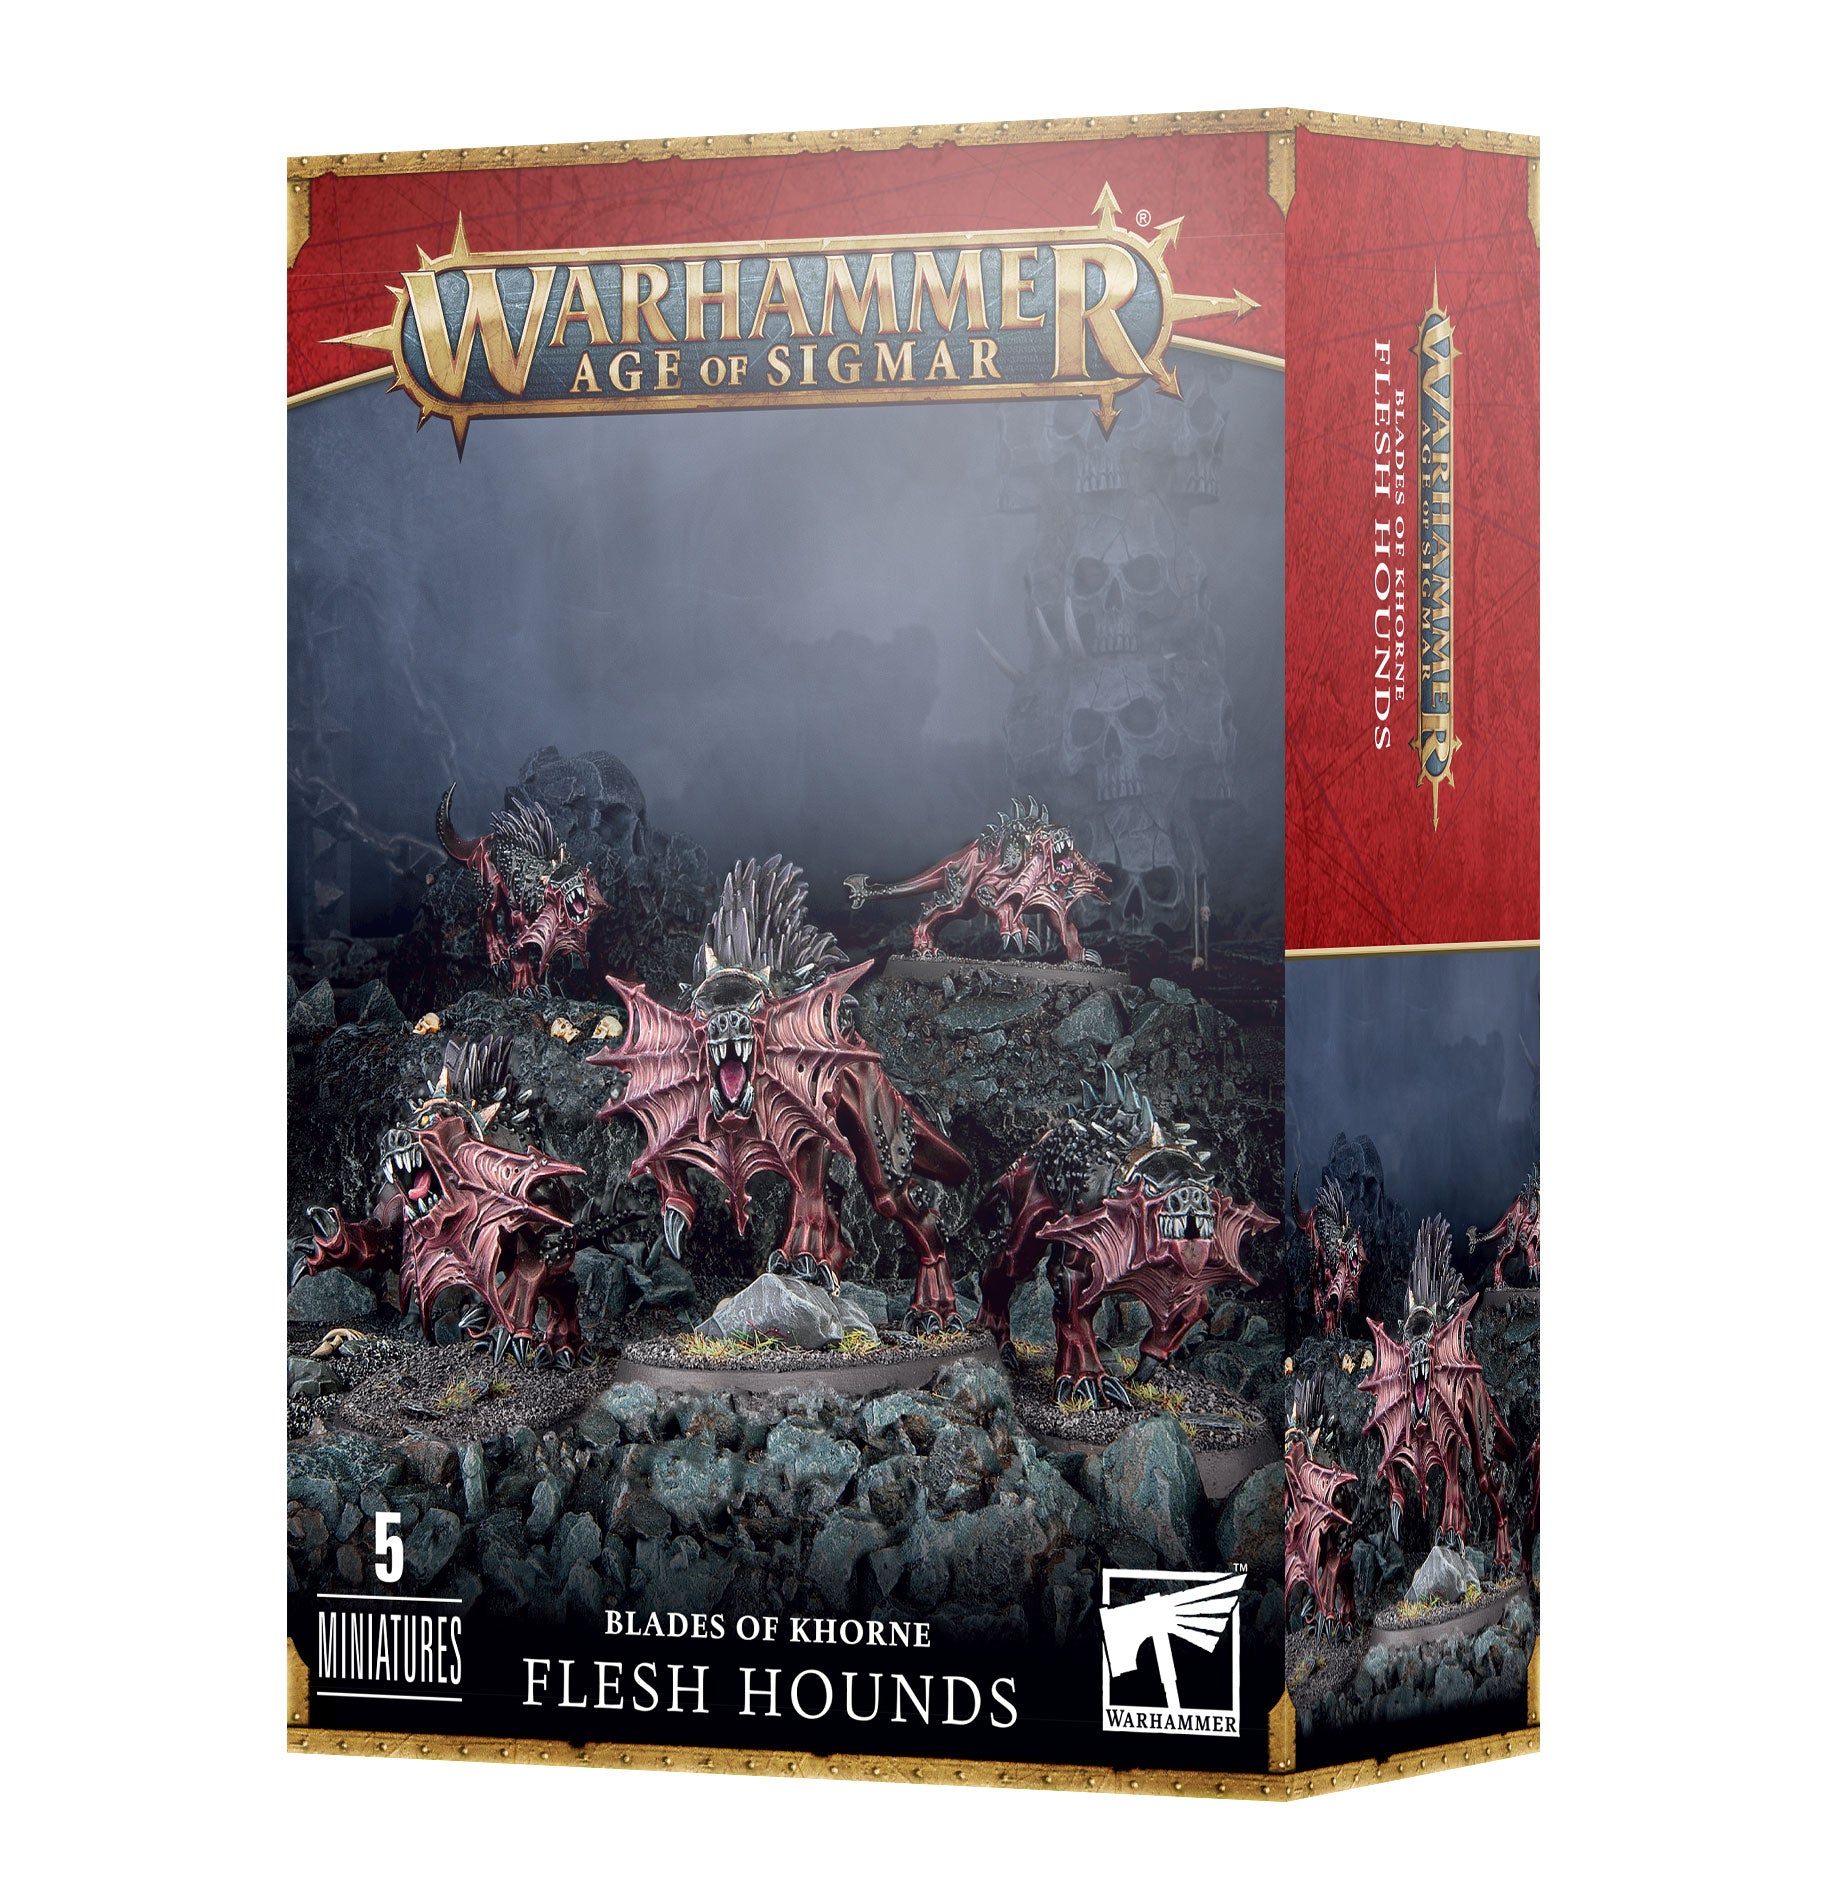 a box of warhammer age of sigmar flesh hounds